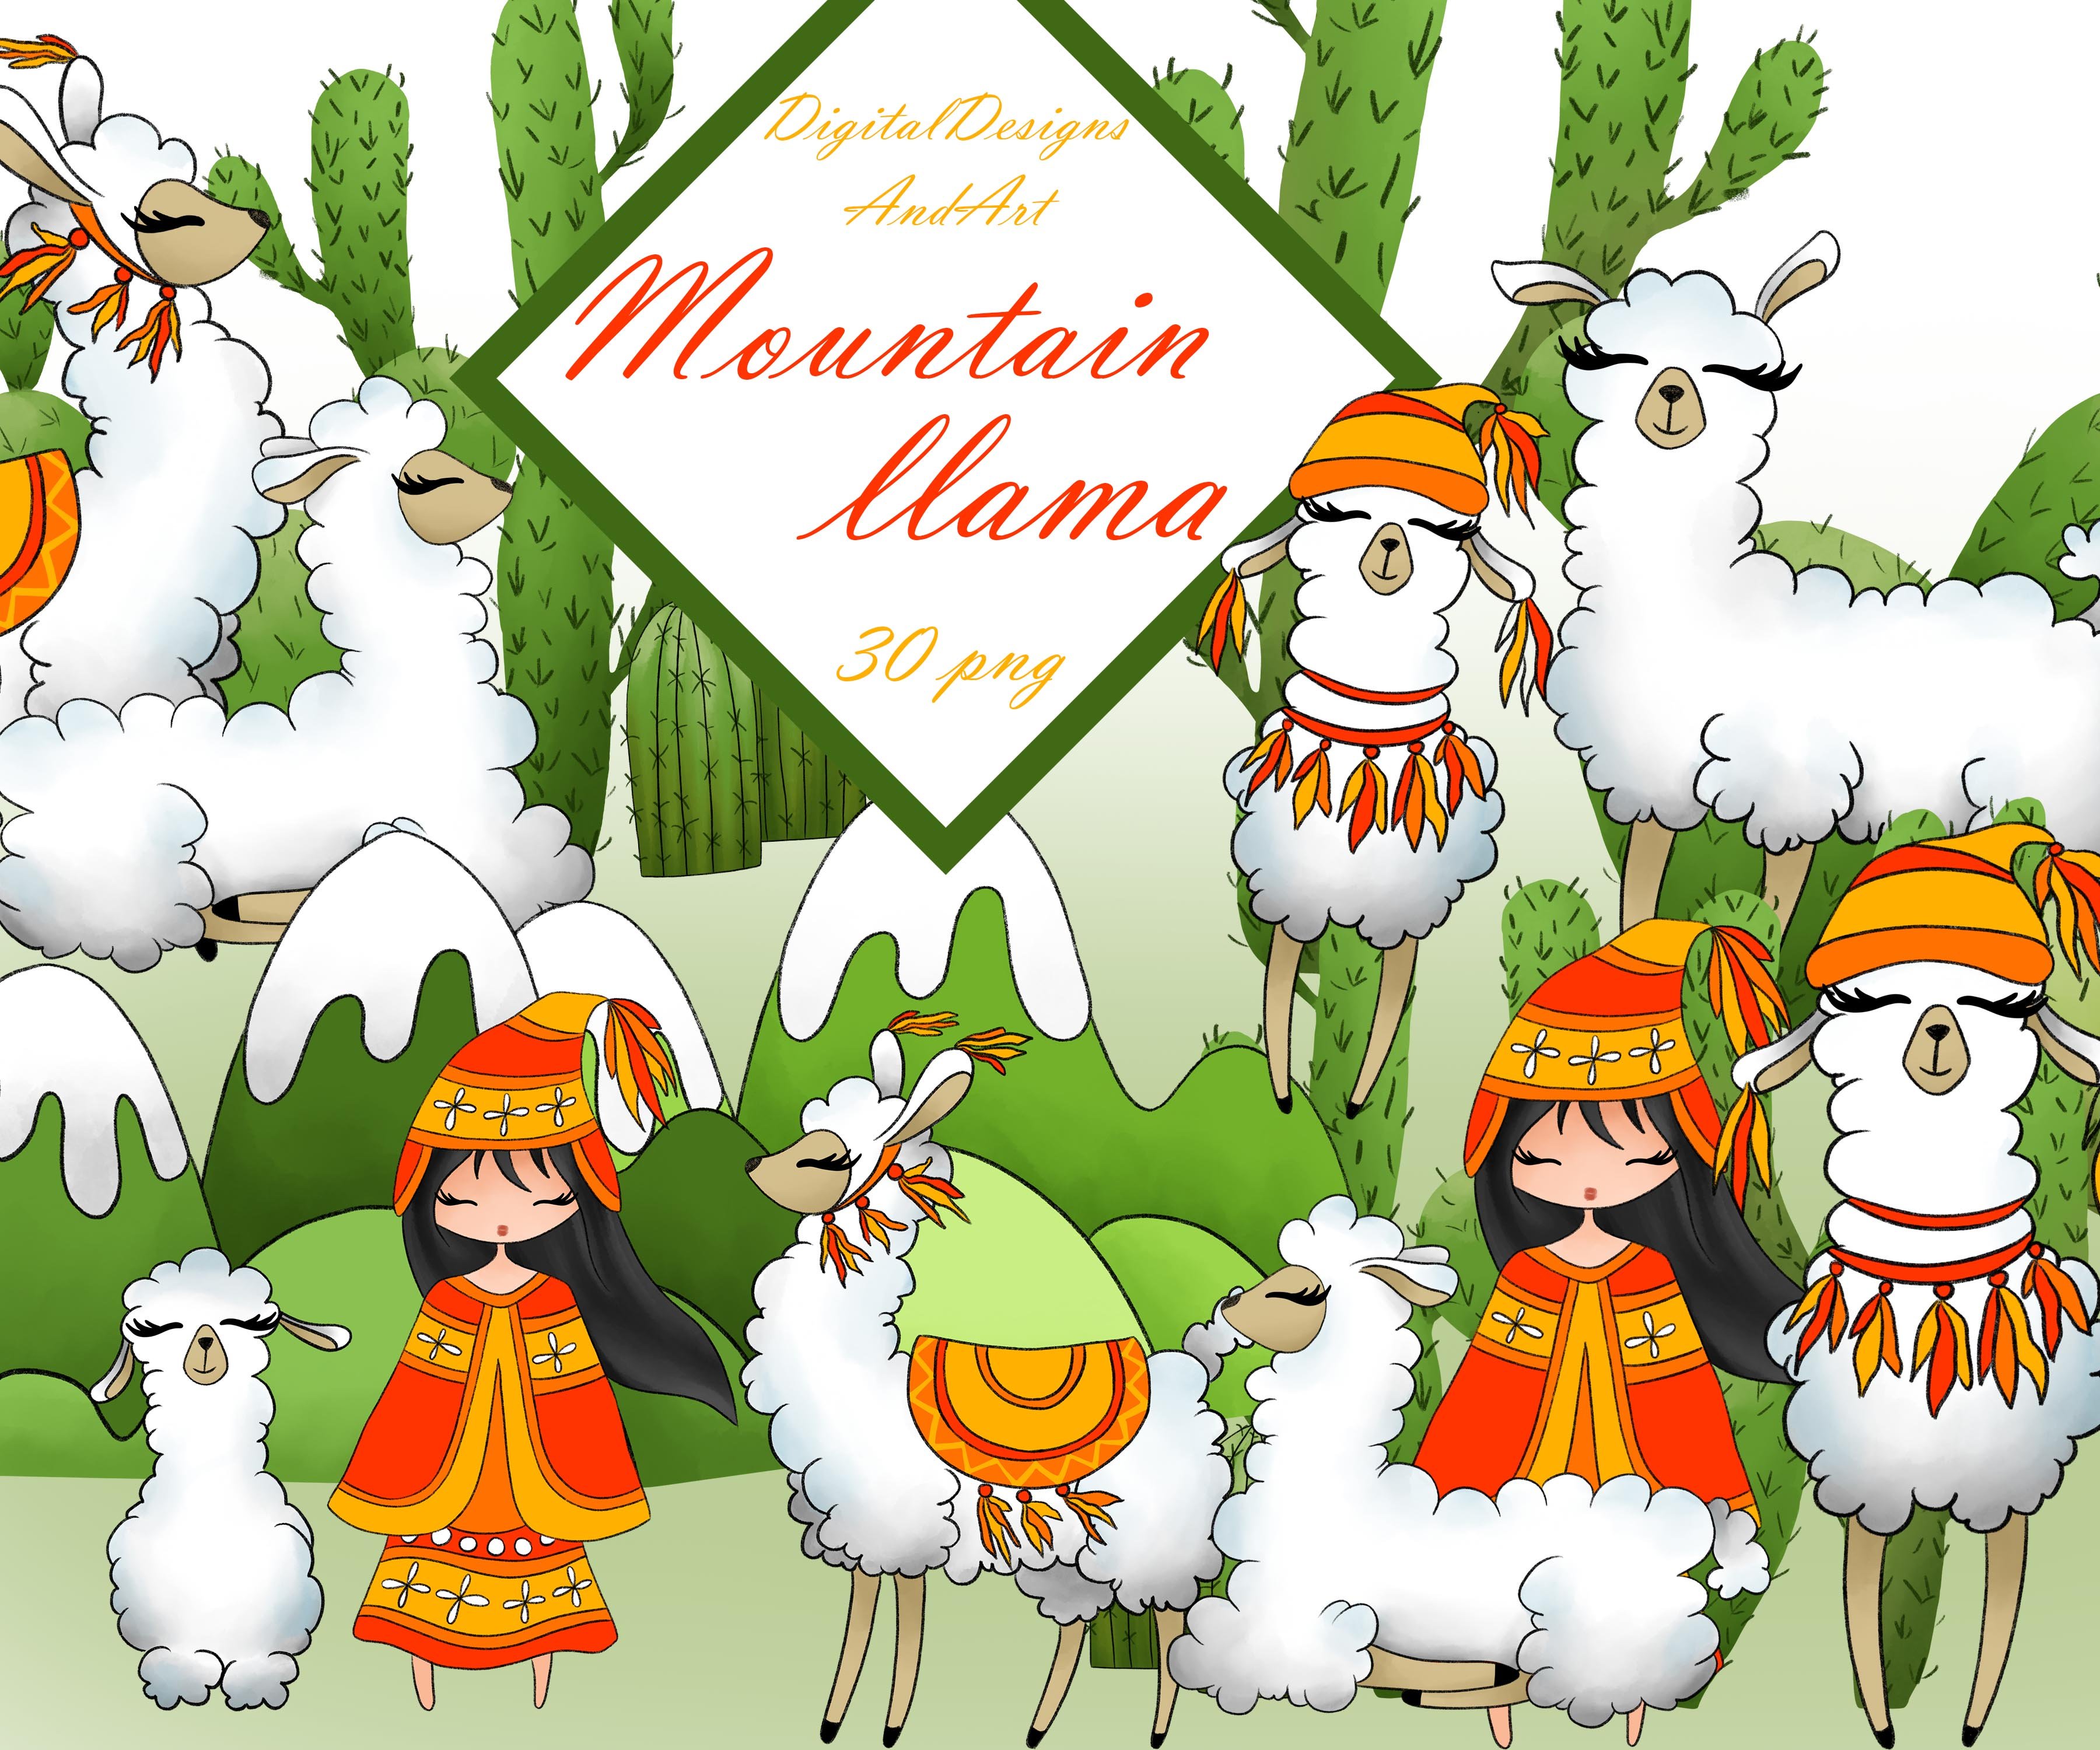 Mountain llama clipart cover image.